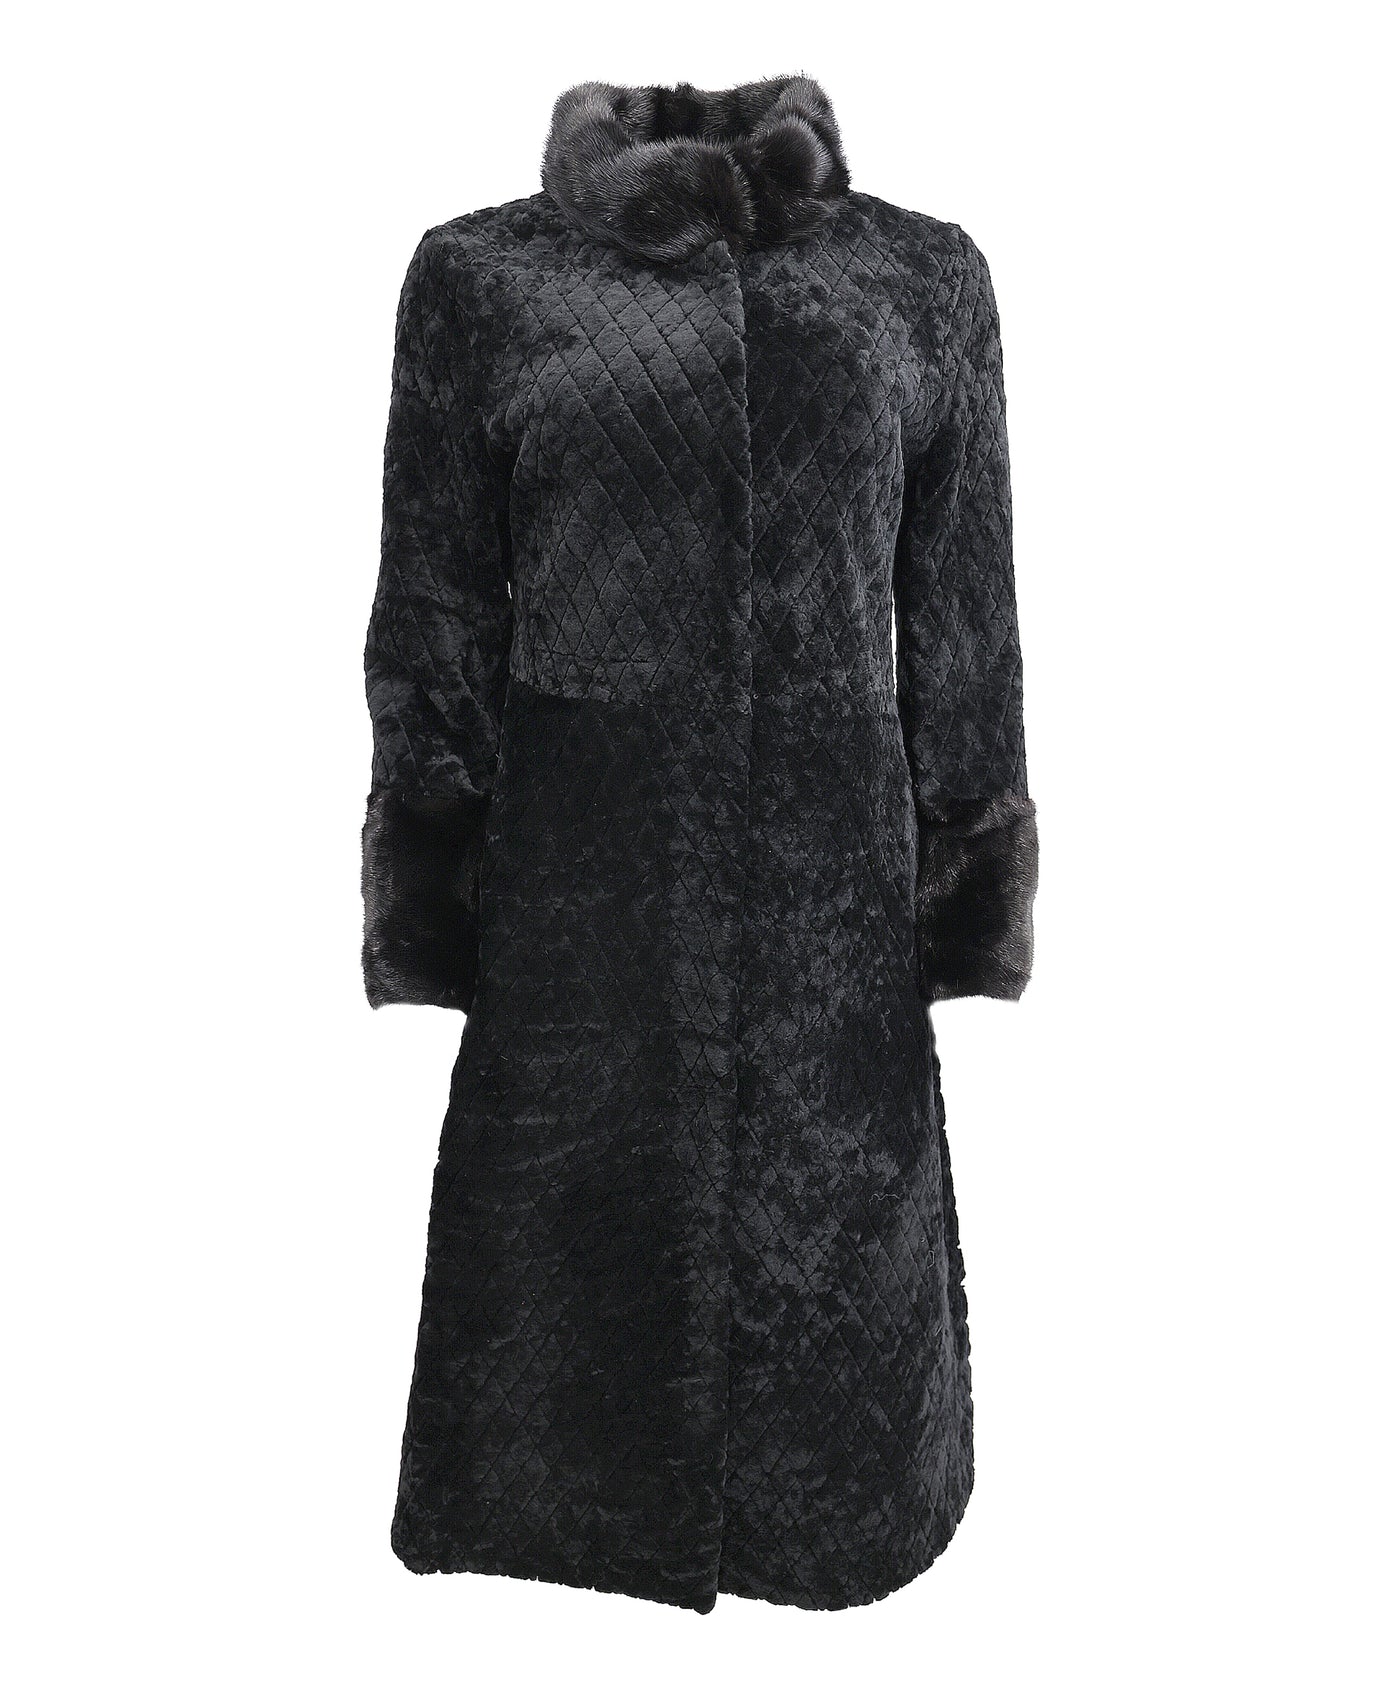 Diamond Textured Shearling Coat w/ Fur Trim image 1